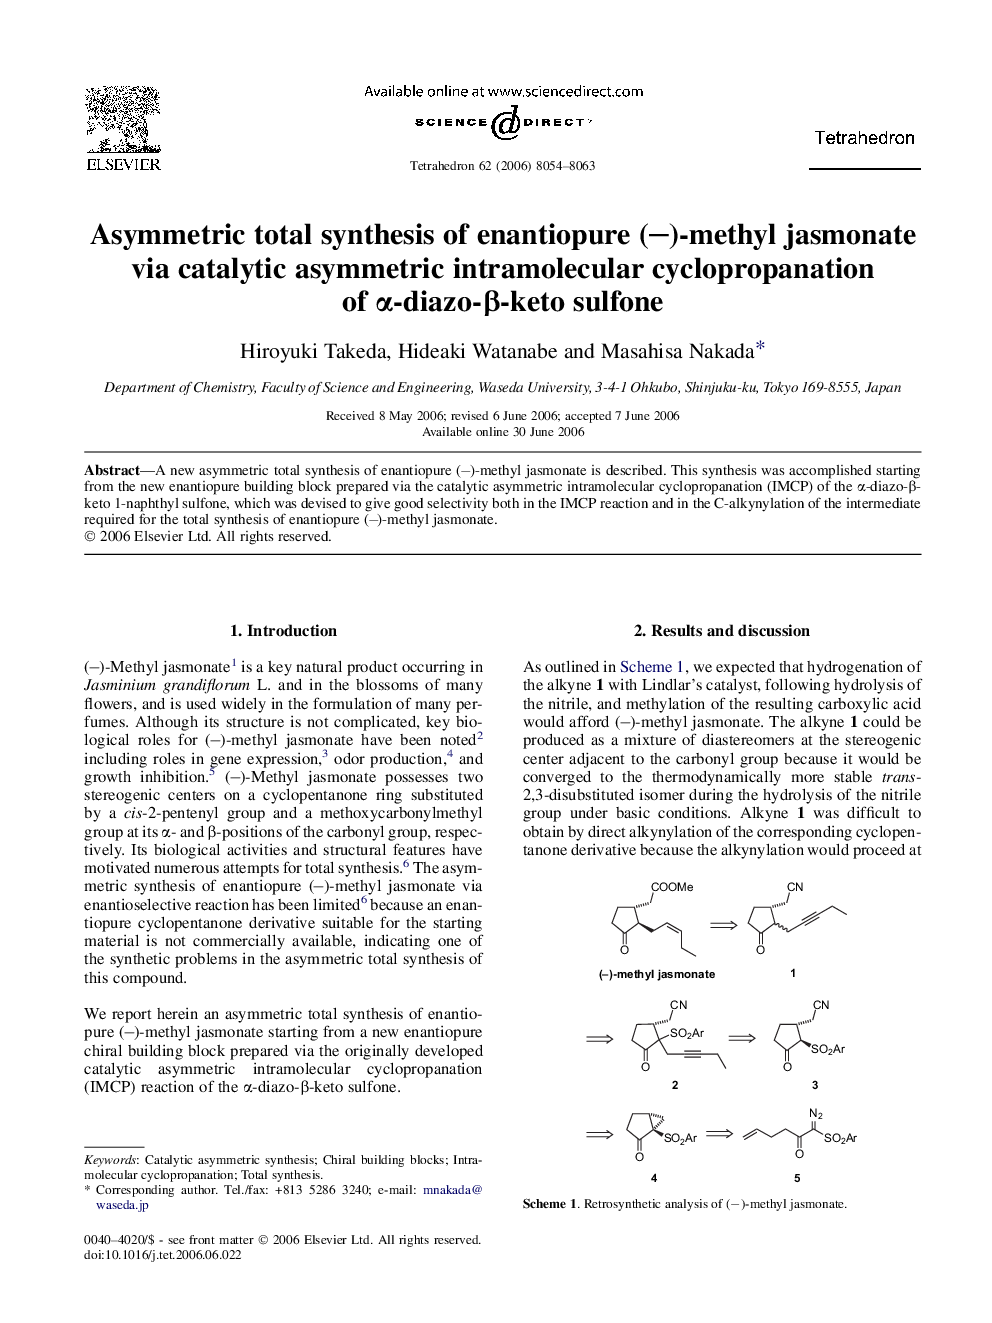 Asymmetric total synthesis of enantiopure (â)-methyl jasmonate via catalytic asymmetric intramolecular cyclopropanation of Î±-diazo-Î²-keto sulfone